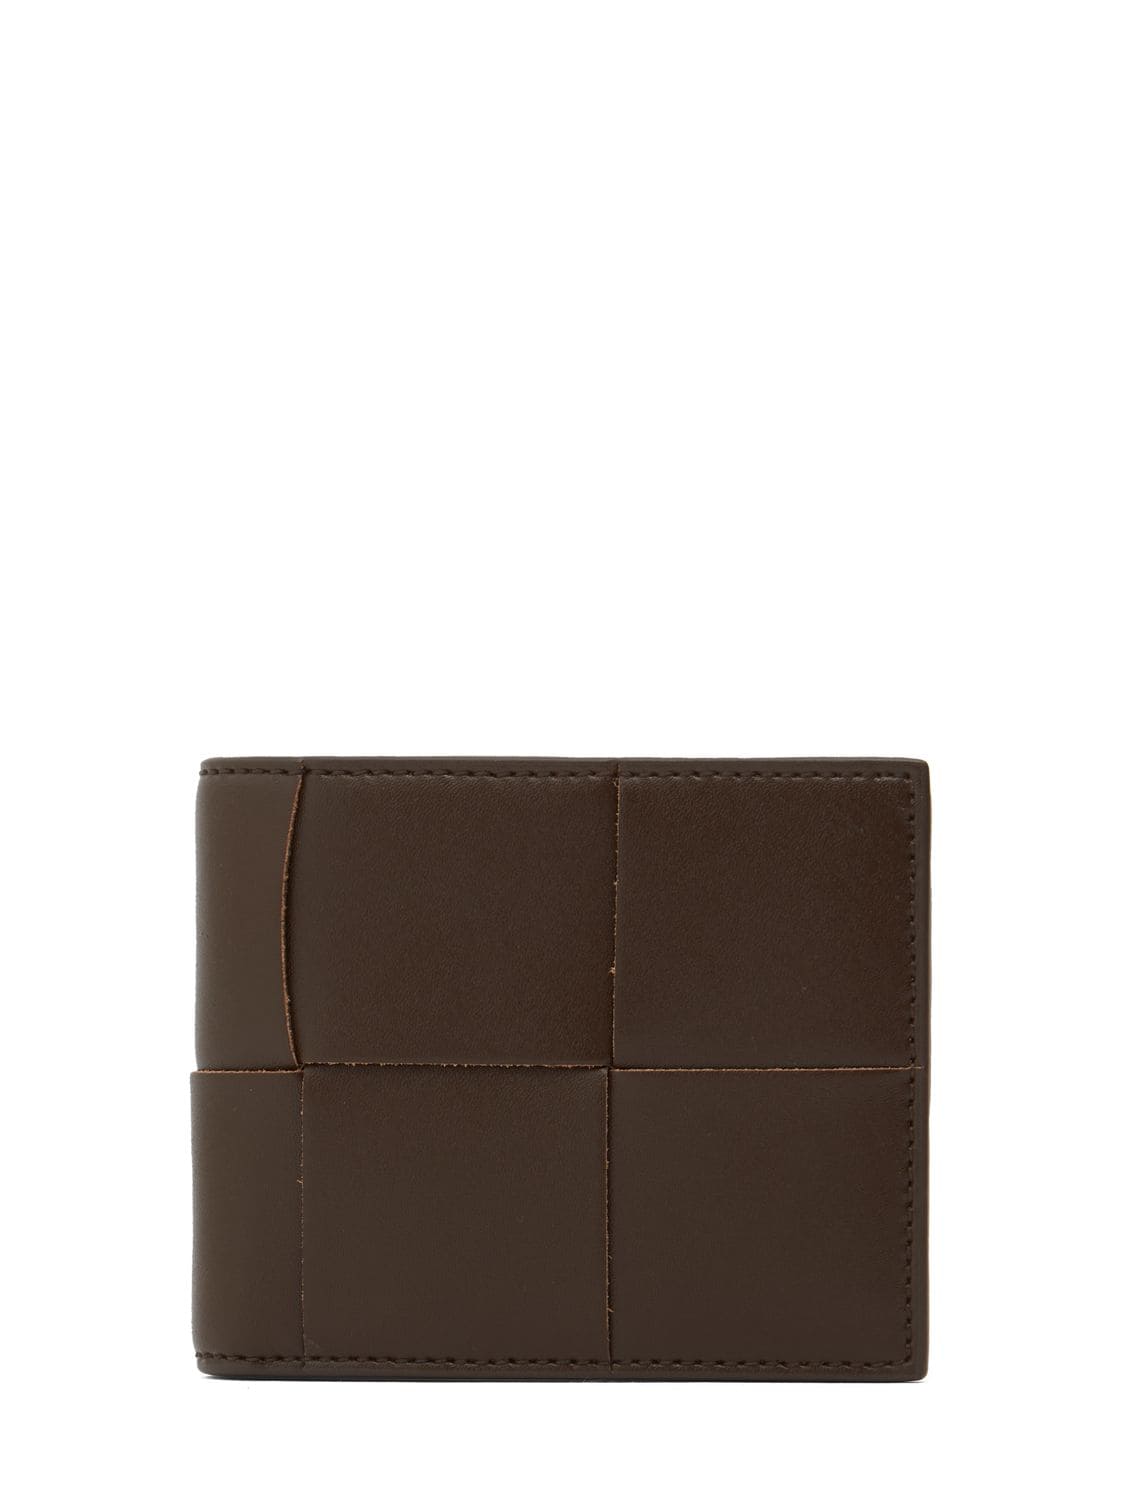 Bottega Veneta Intreccio Leather Wallet In Light Brown